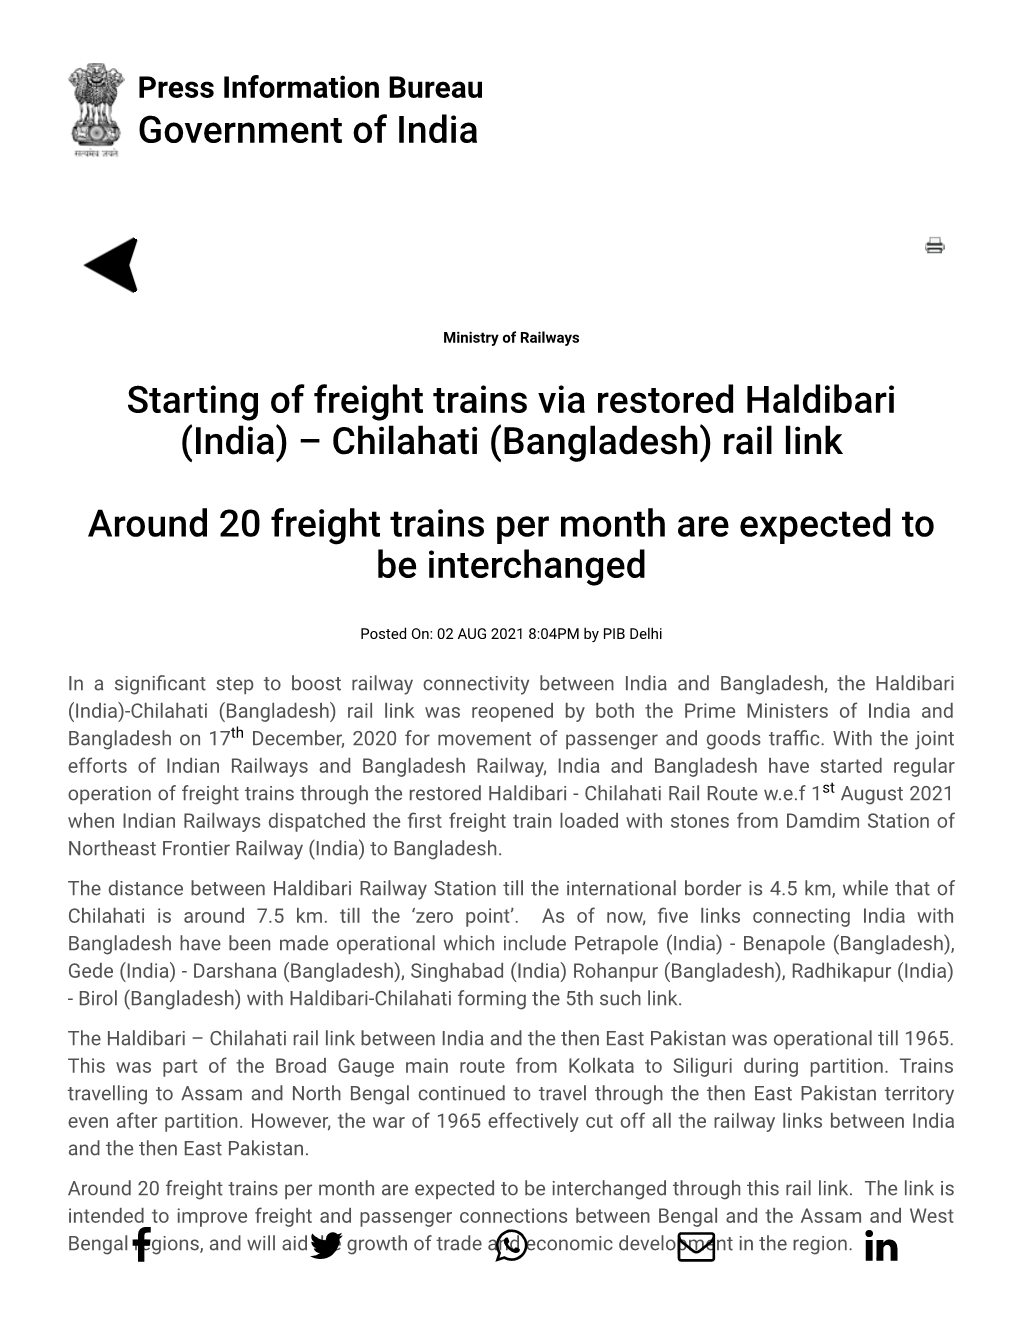 Chilahati (Bangladesh) Rail Link Around 20 Freight Trains Per Mont